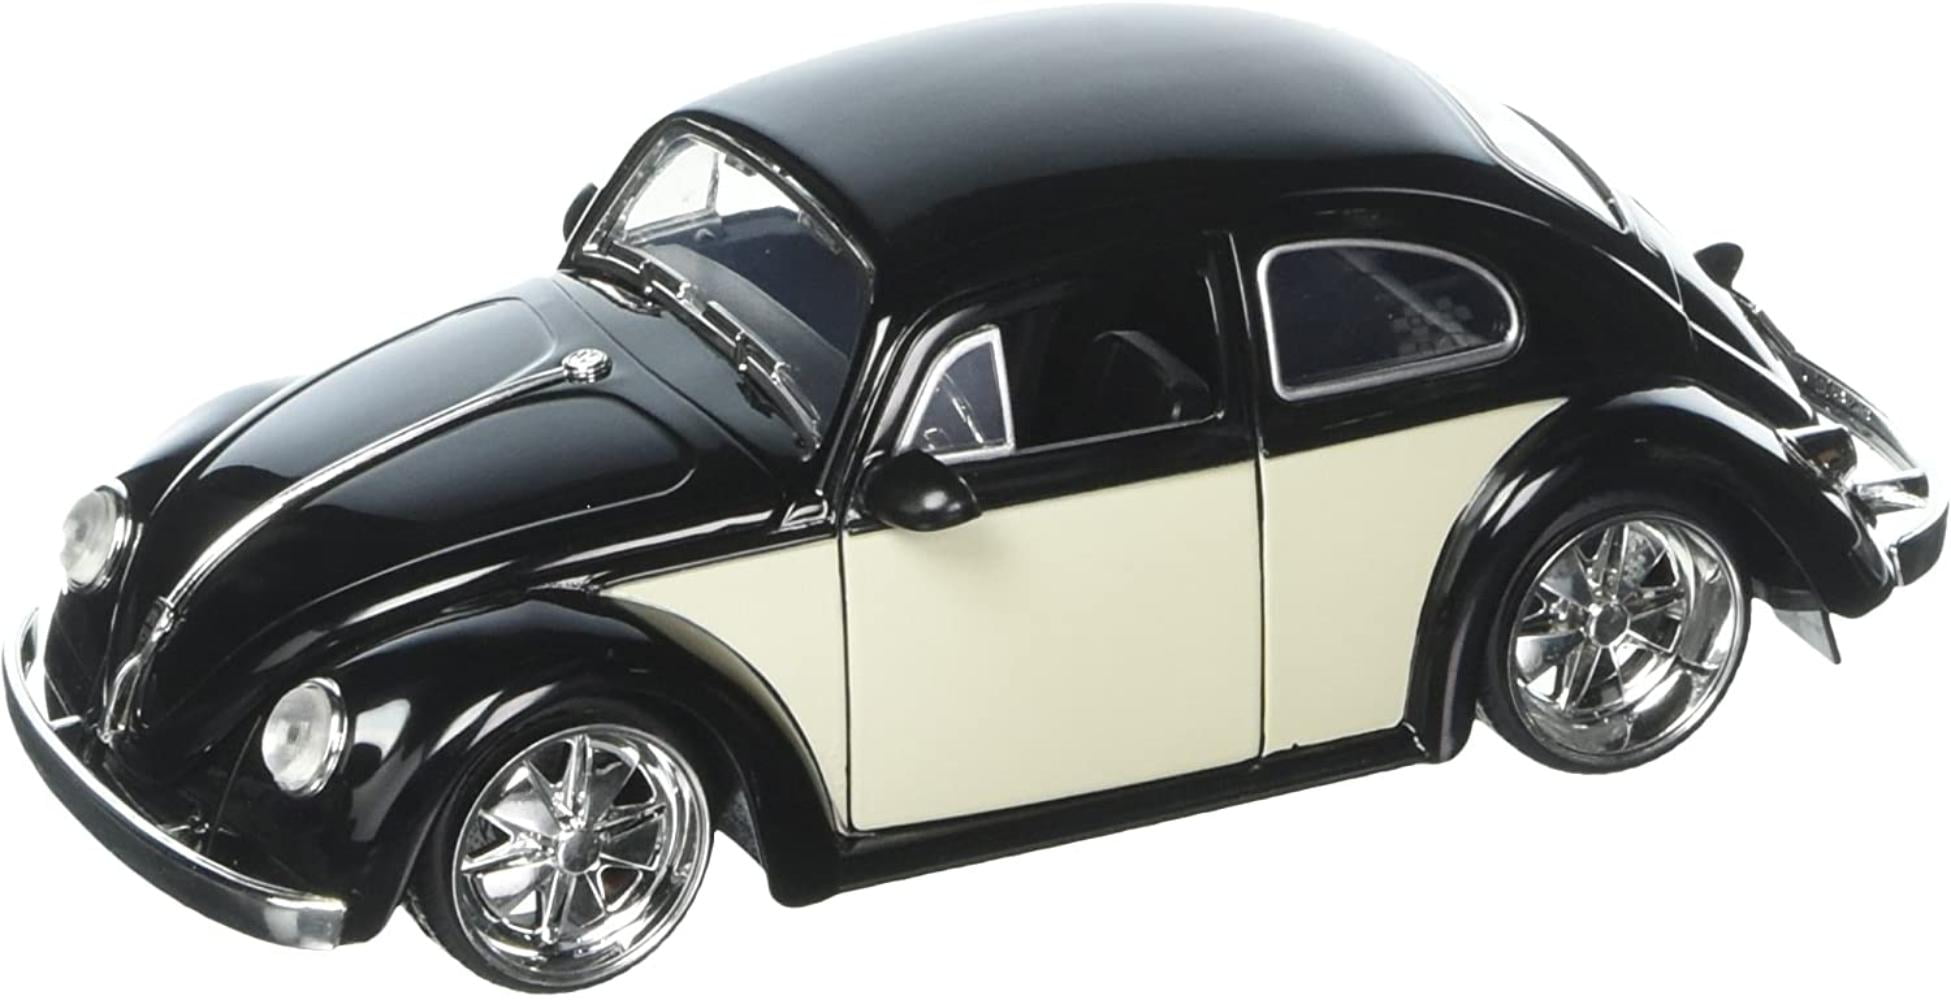 1:24 1959 VW Beetle JADA Bigtime Kustoms Volkswagen Black